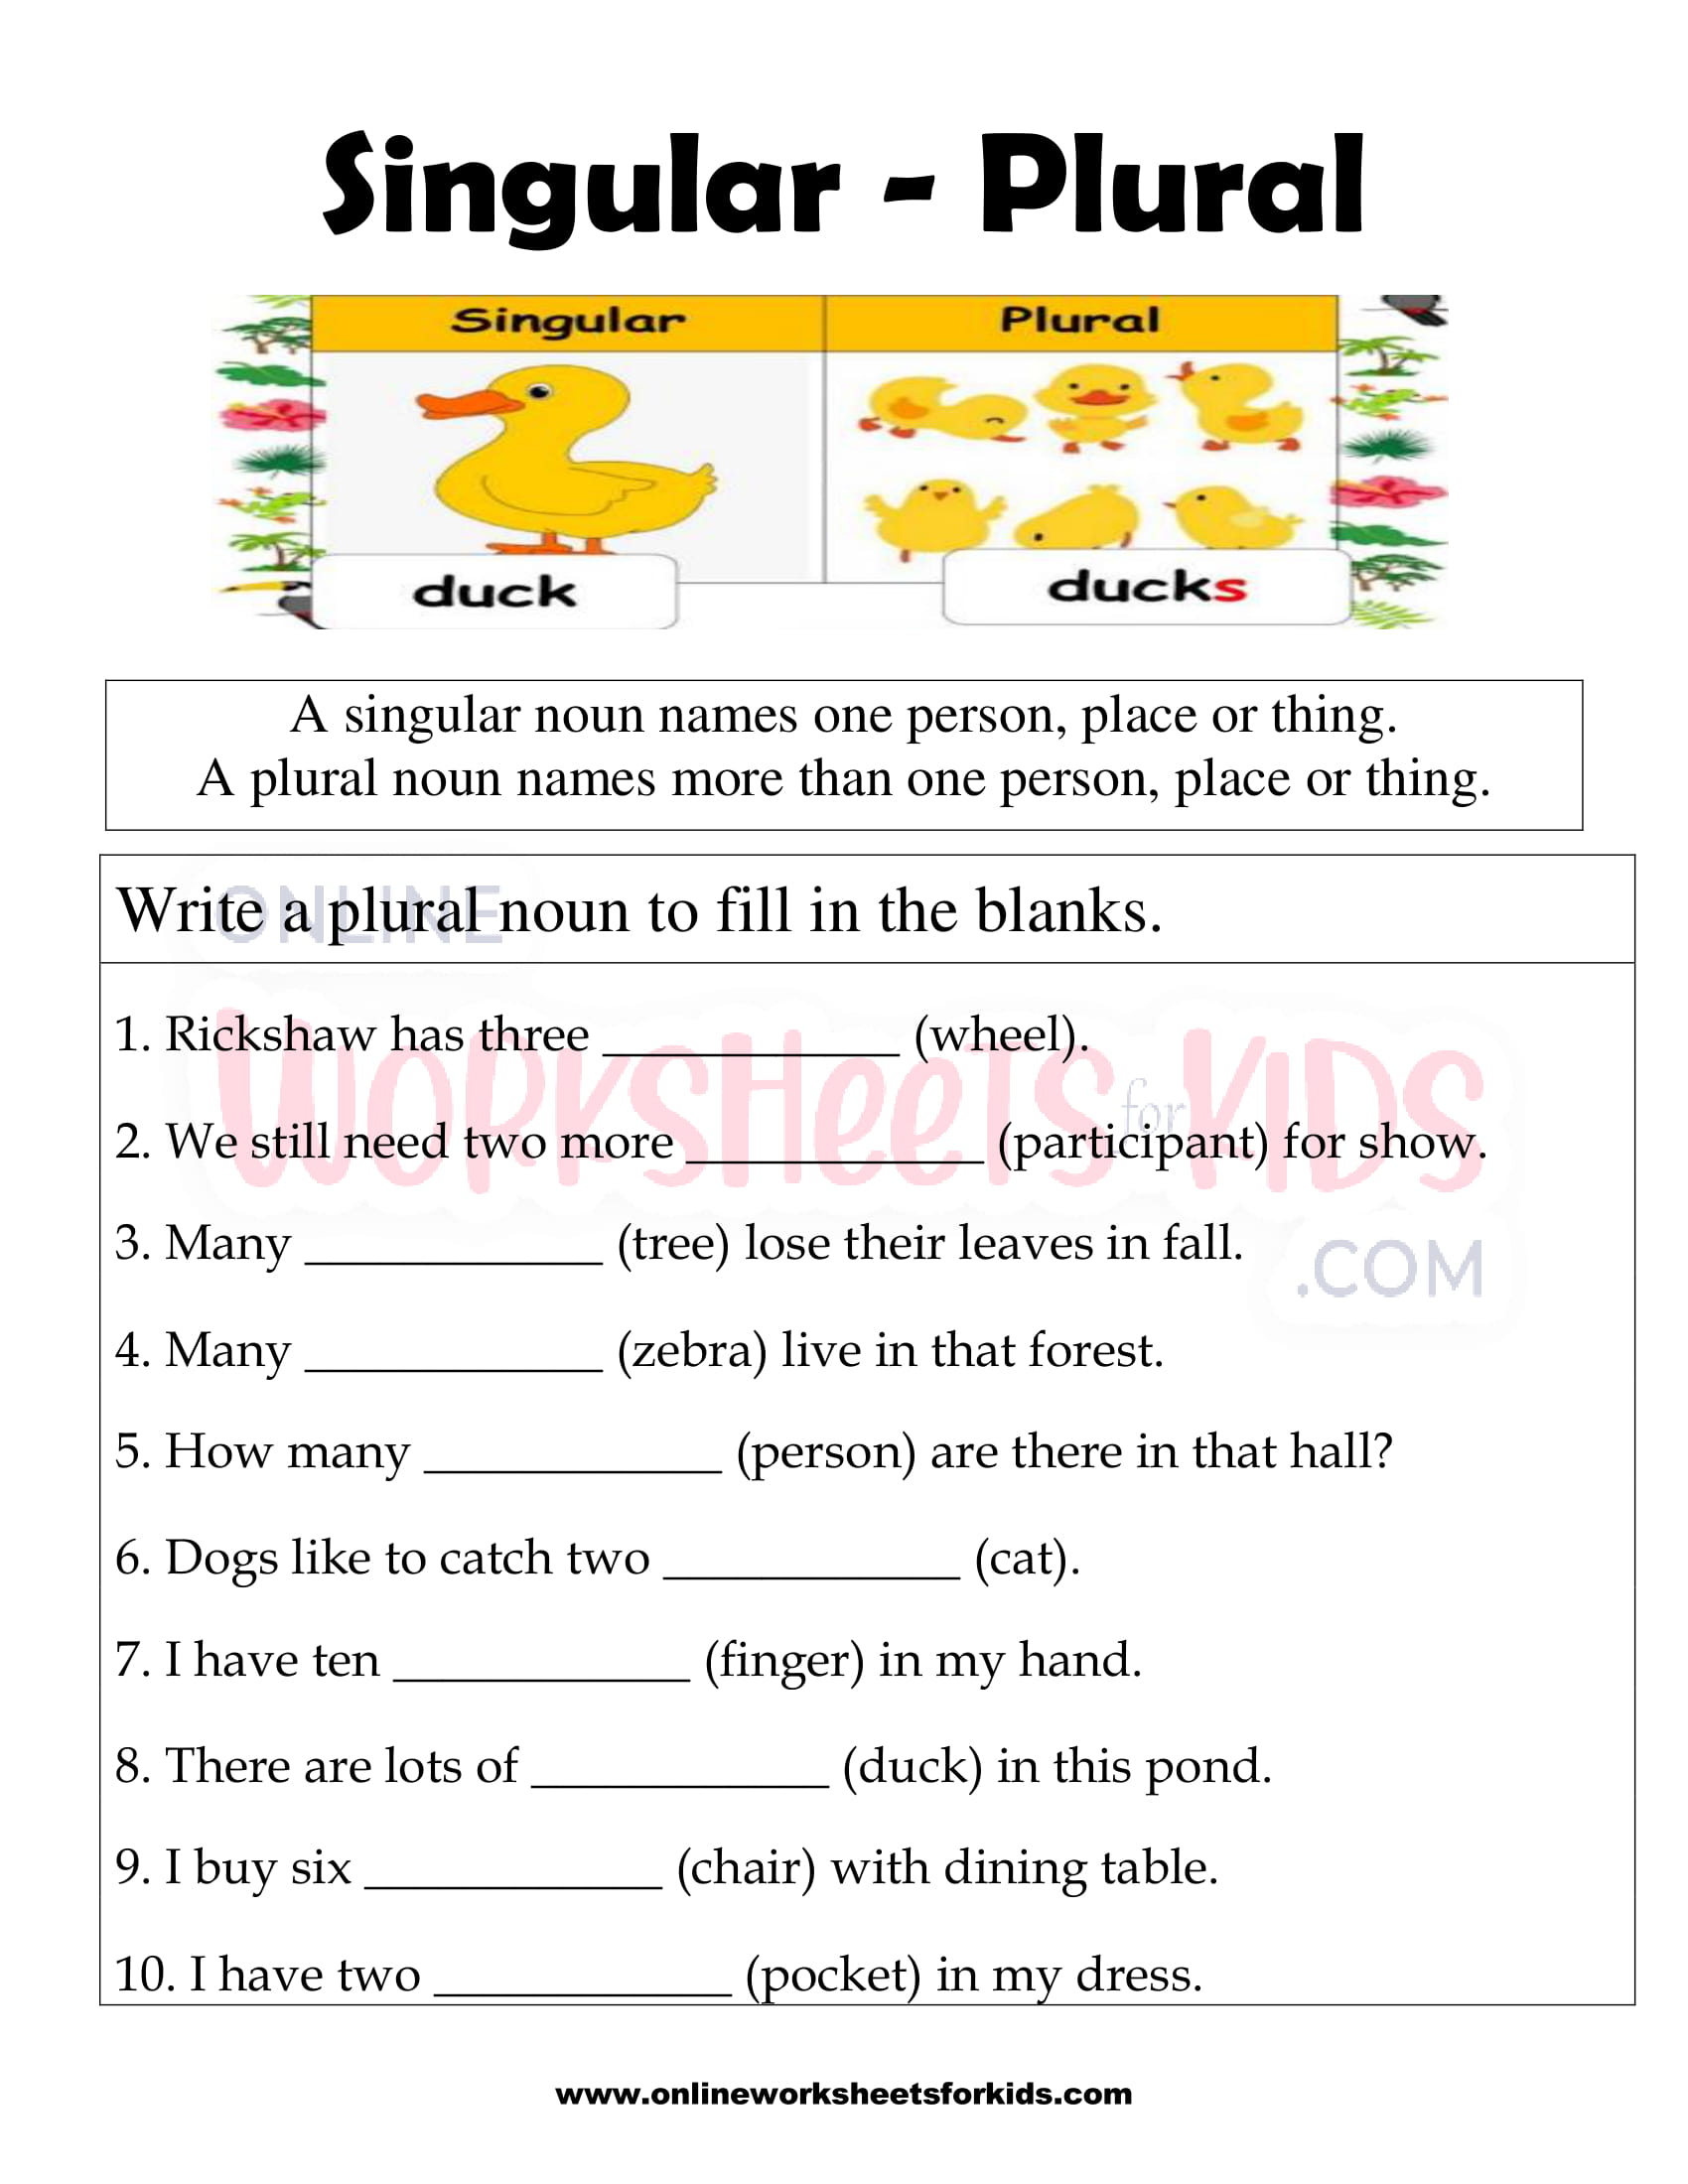 singular-and-plural-nouns-fb-worksheet-9